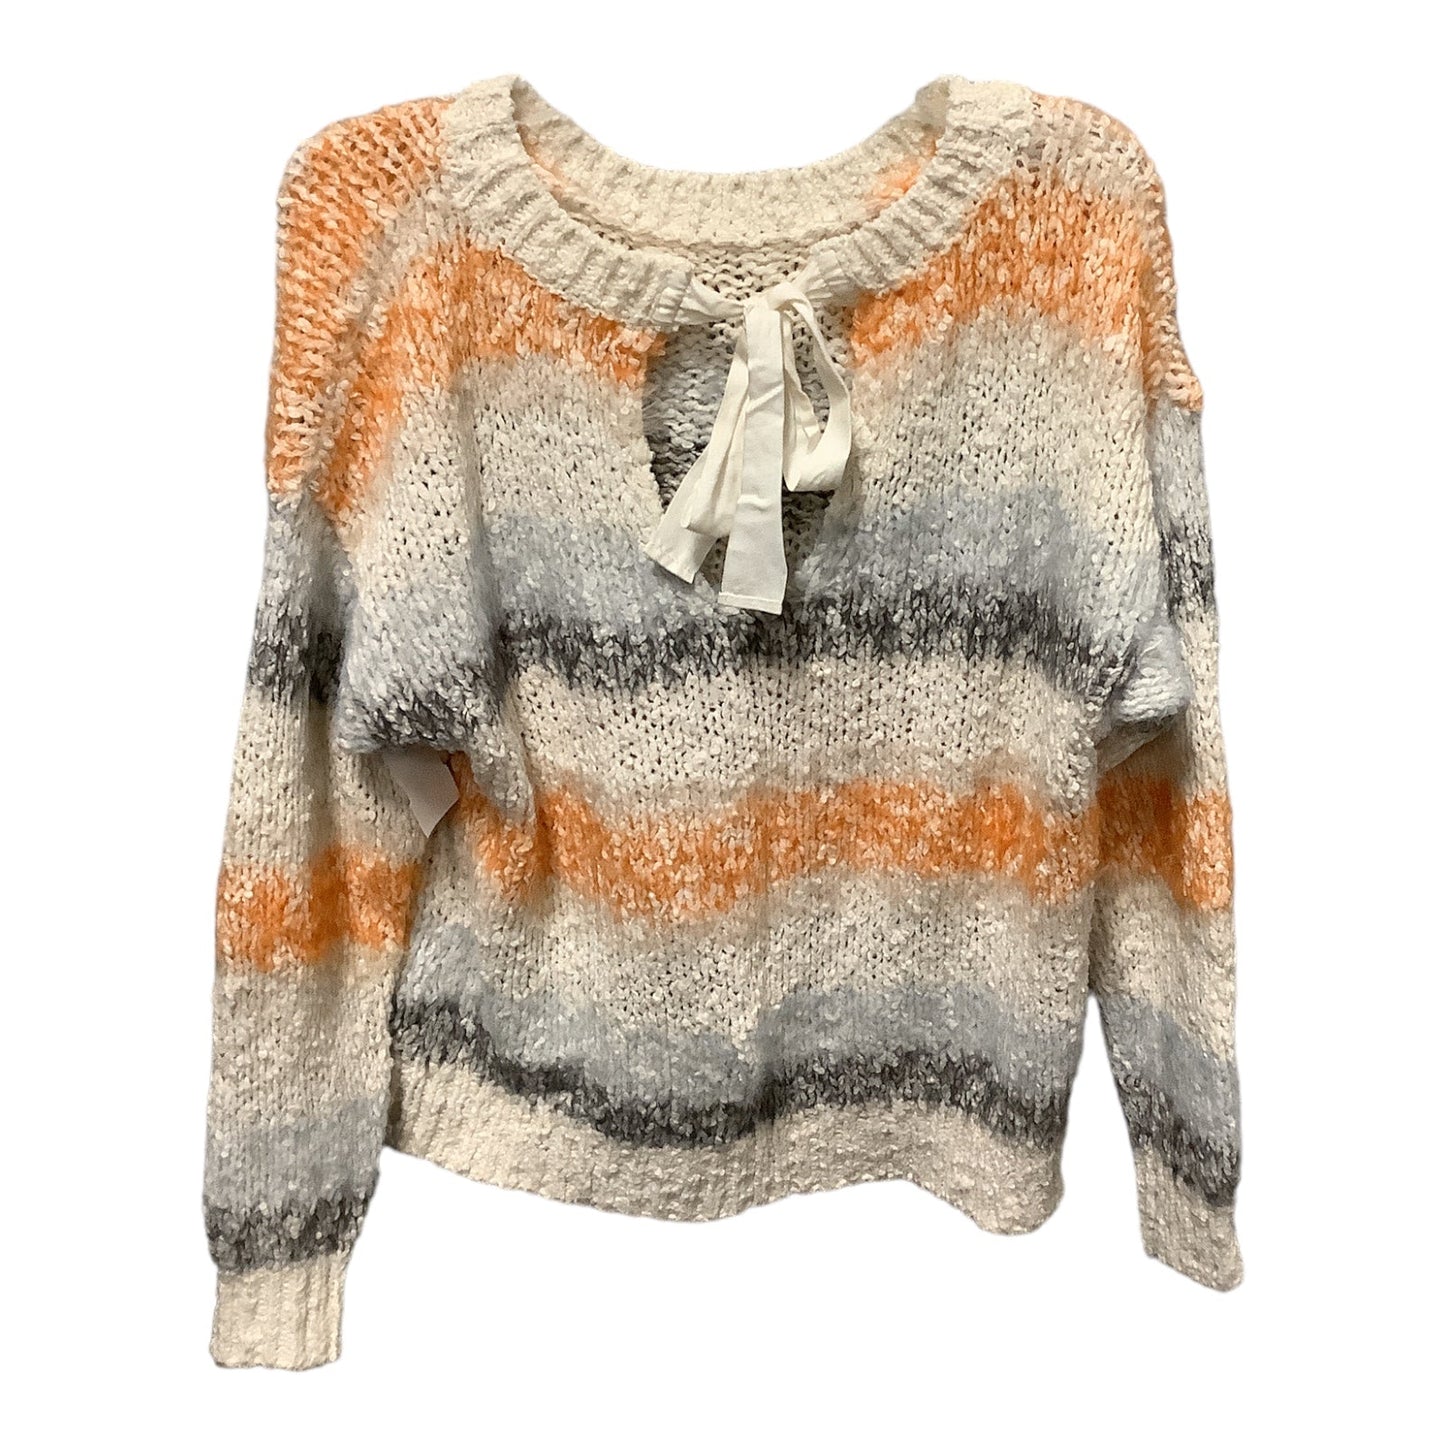 Sweater By Meadow Rue  Size: S